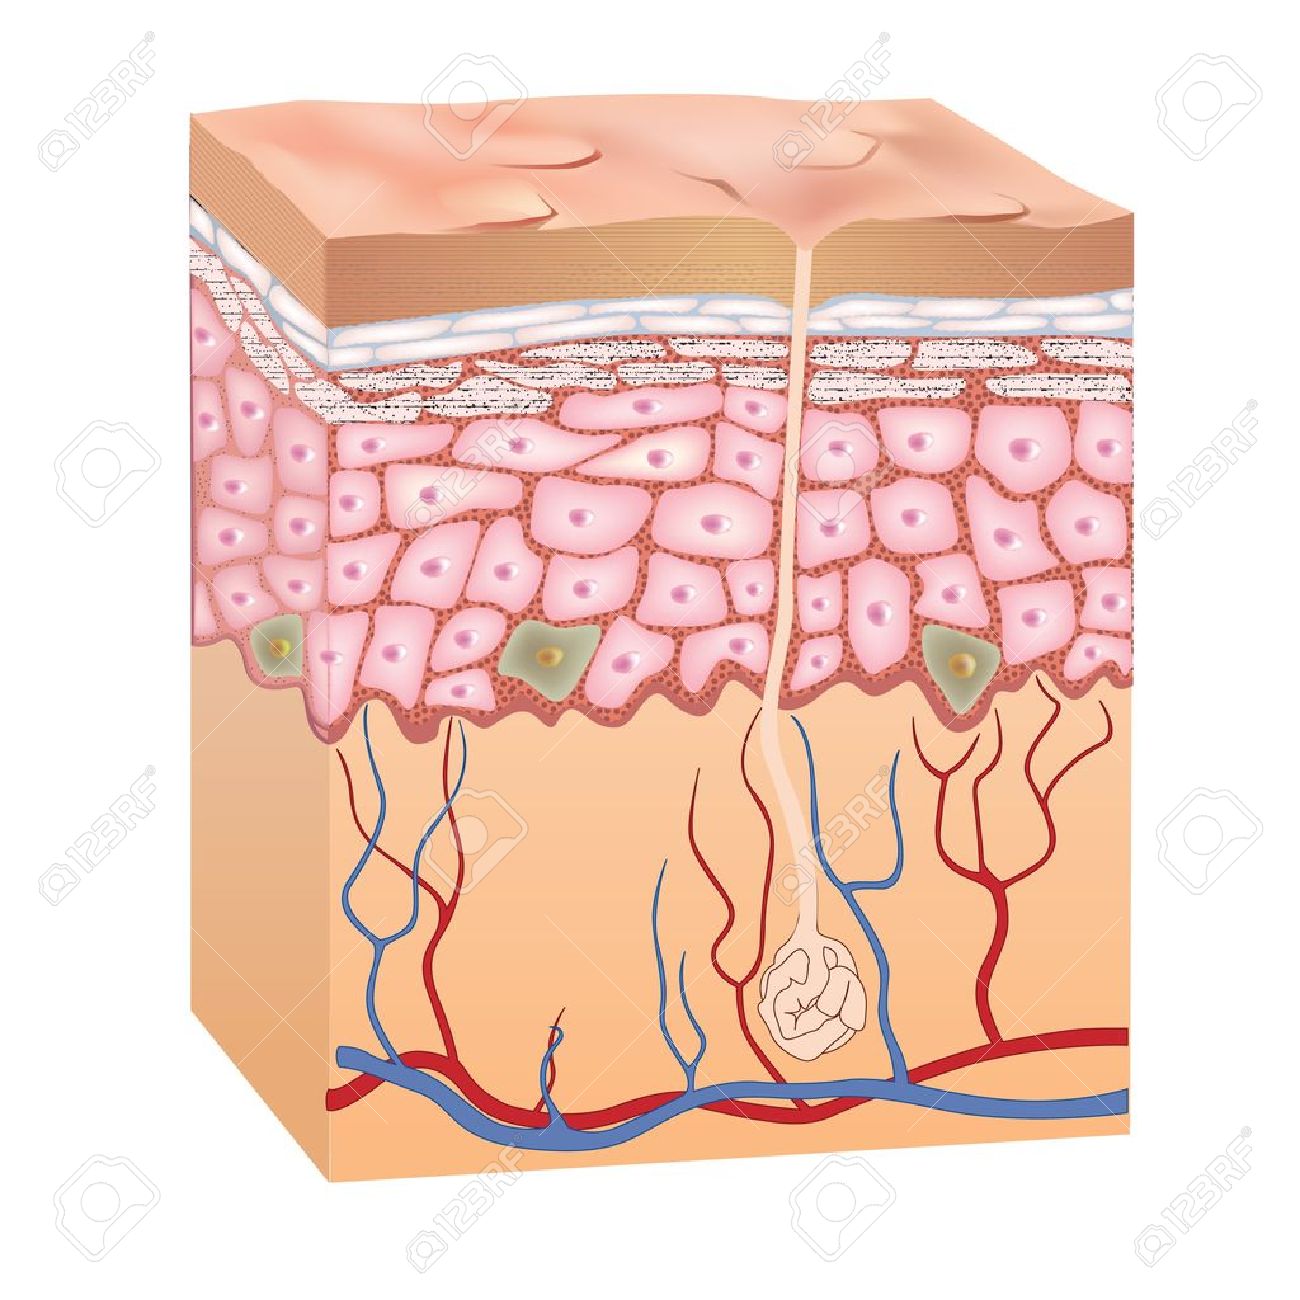 Human Skin Structure Vector Illustration Of Epidermis Anatomy.